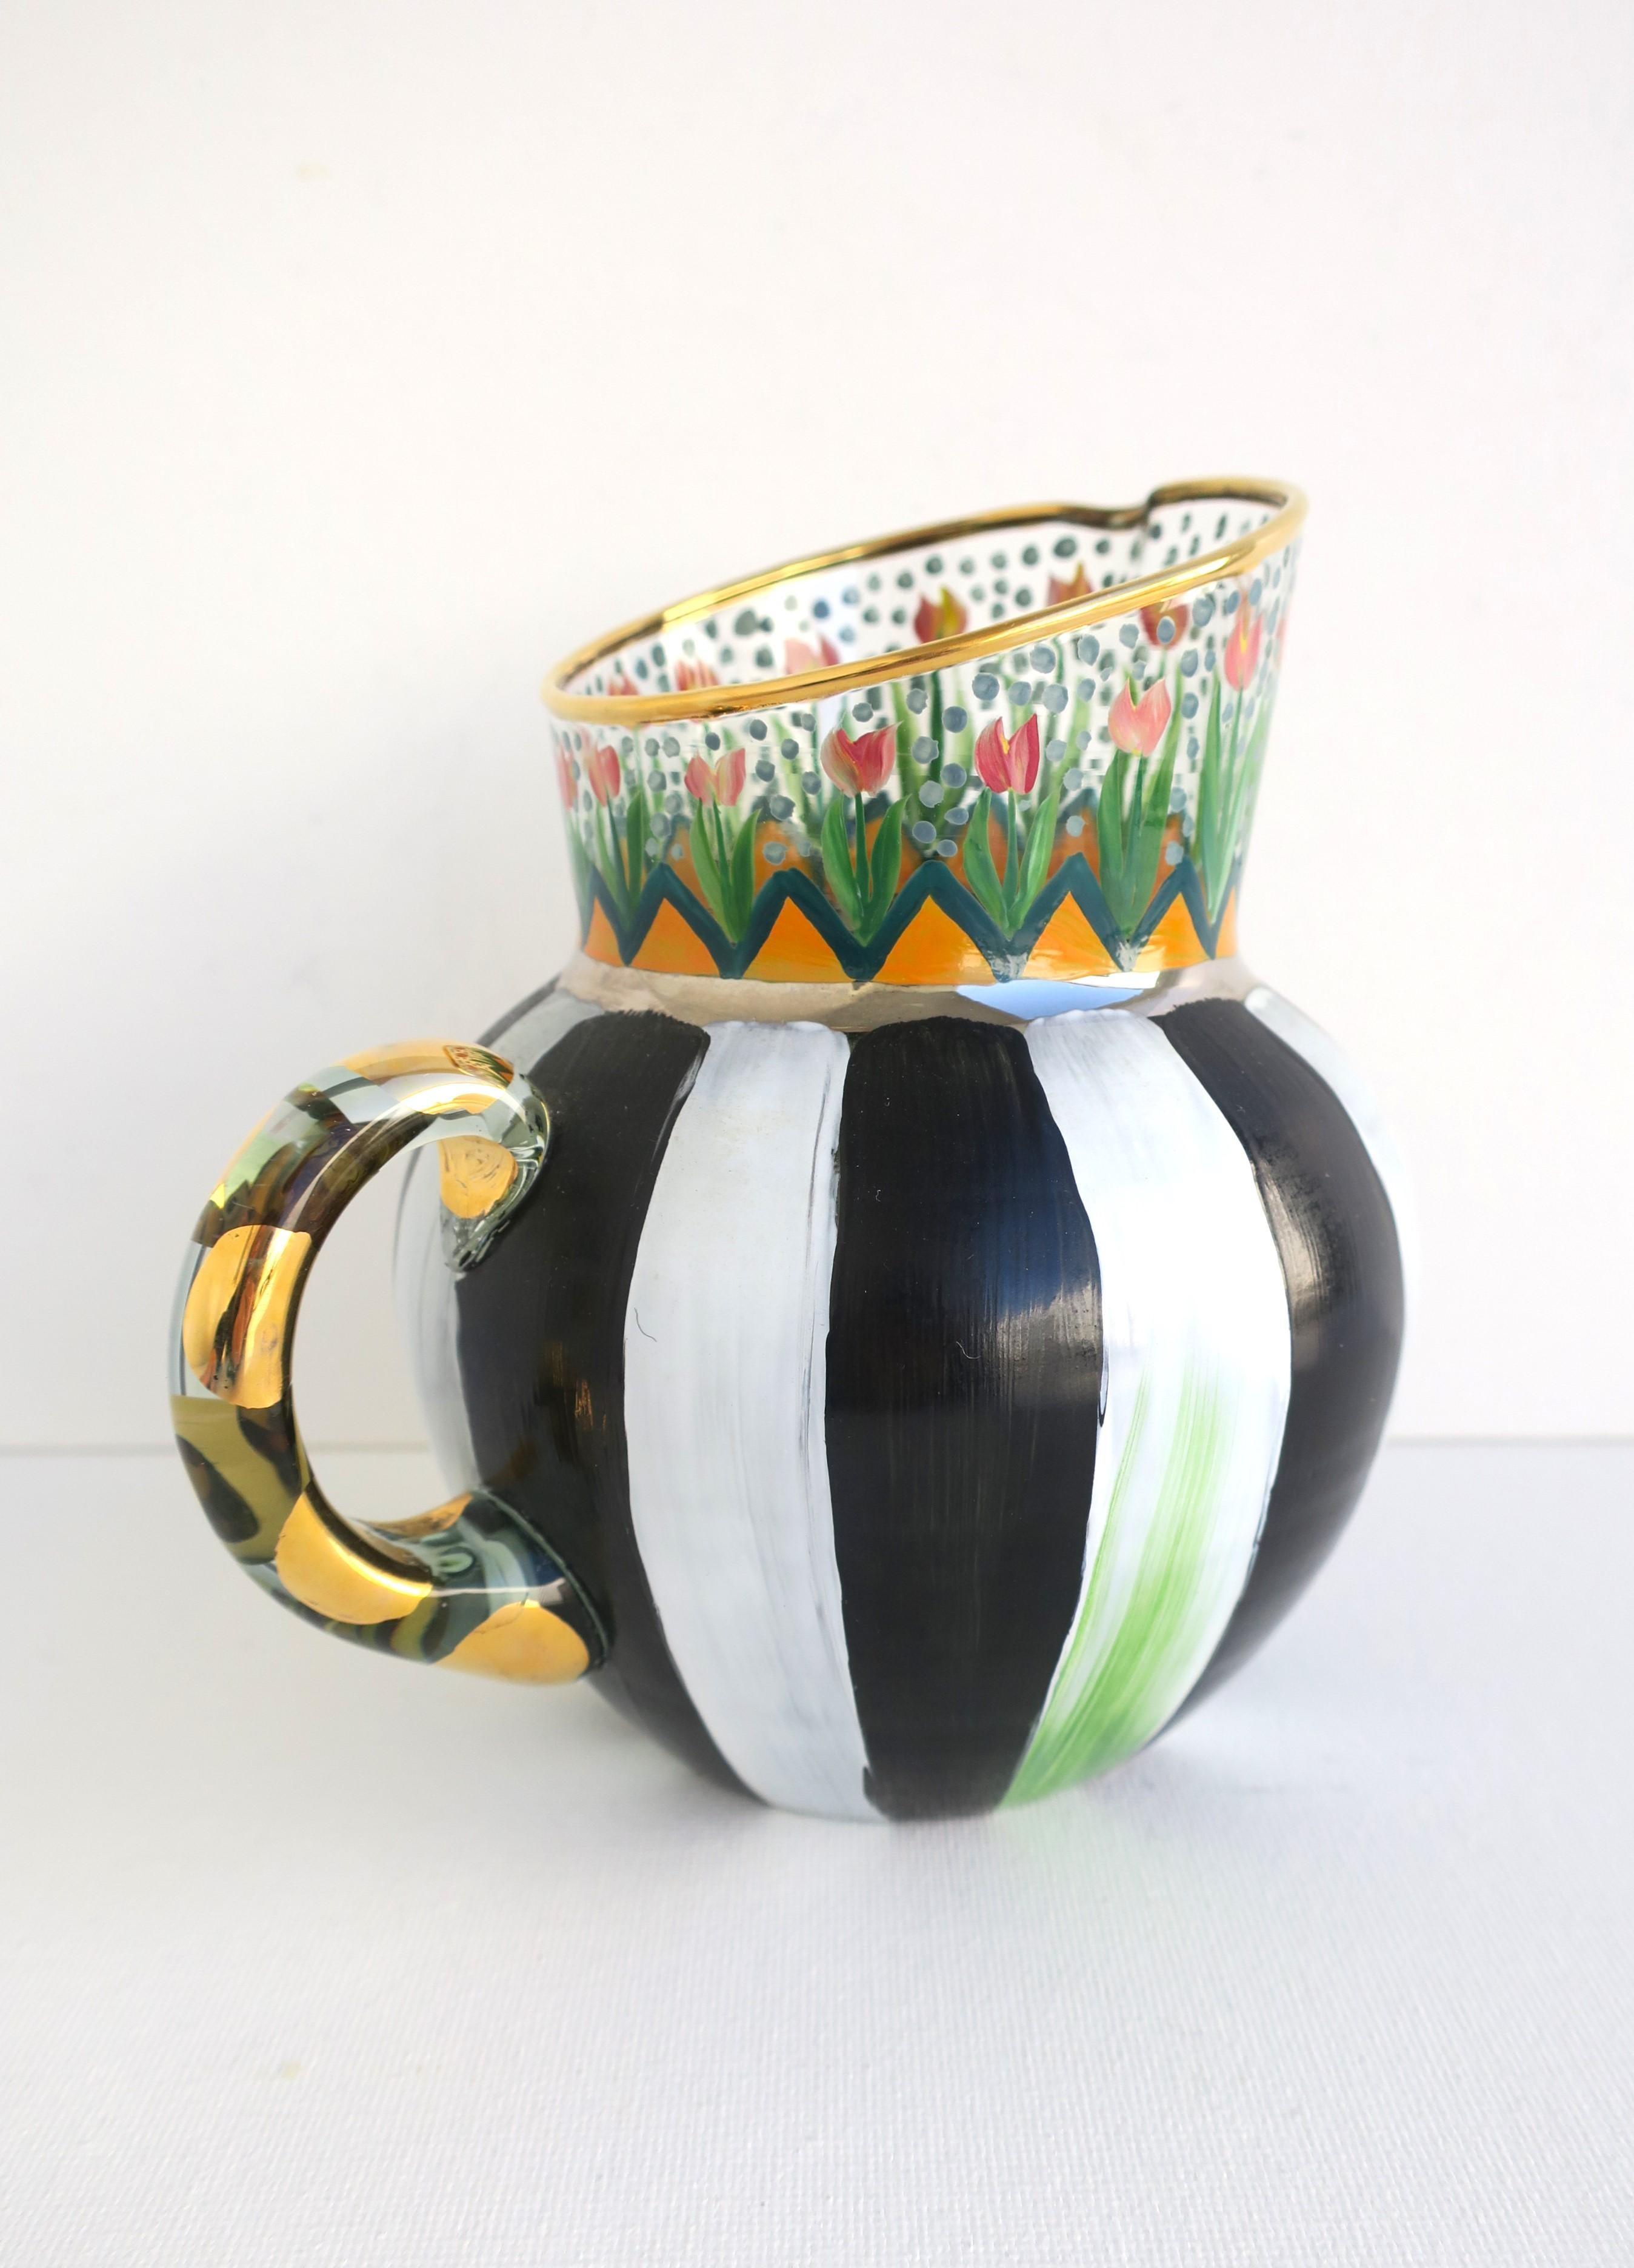 Mackenzie Childs Art Glass Pitcher or Vase with Garden Design, circa 1990s For Sale 2